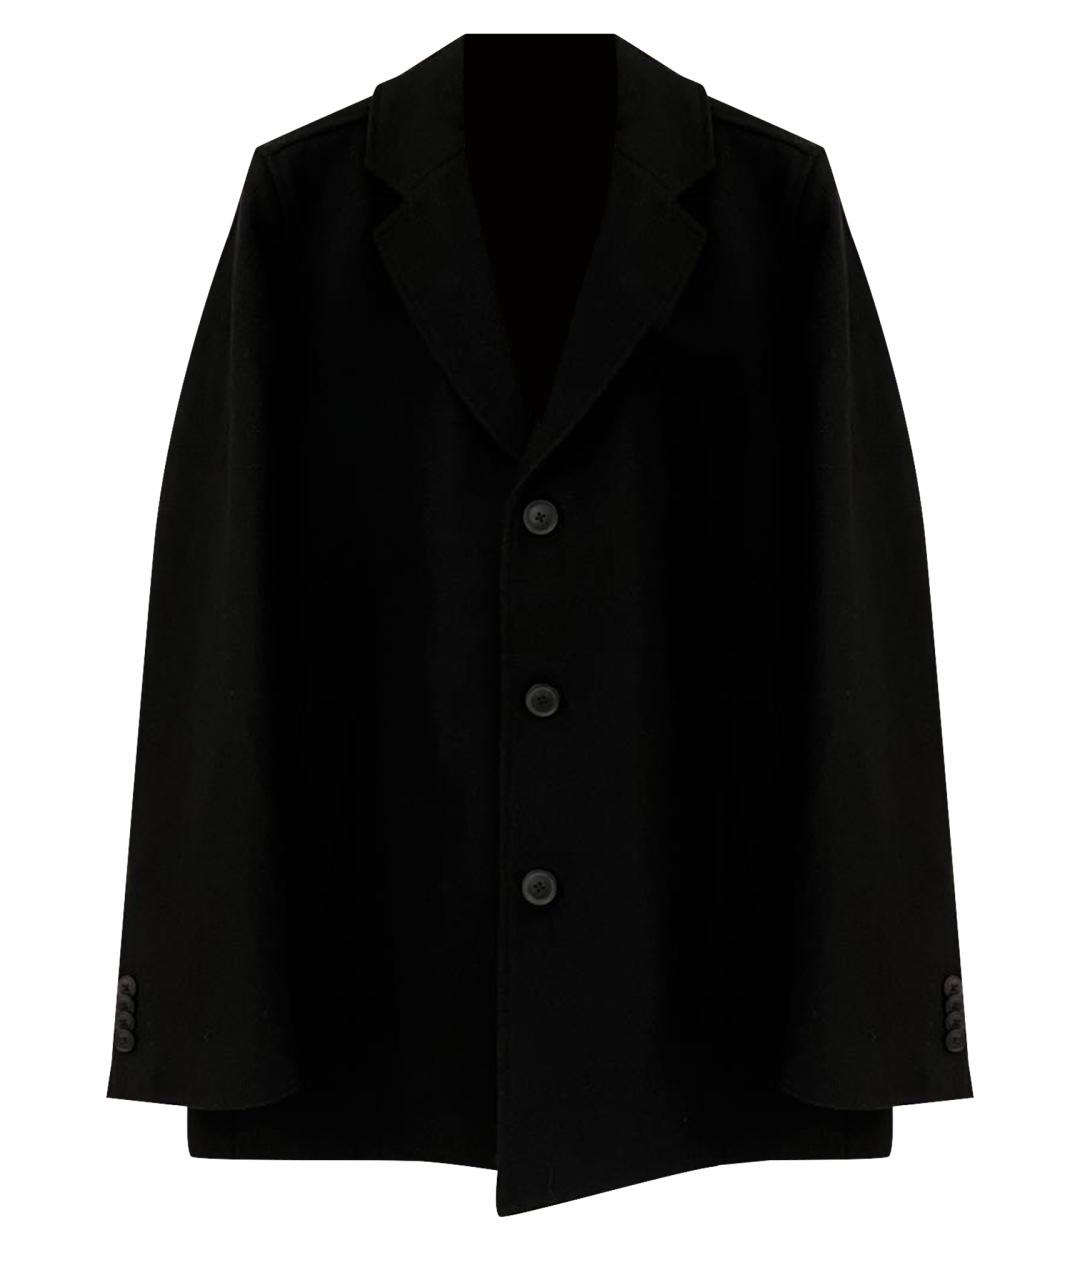 MICHAEL KORS Черное пальто, фото 1